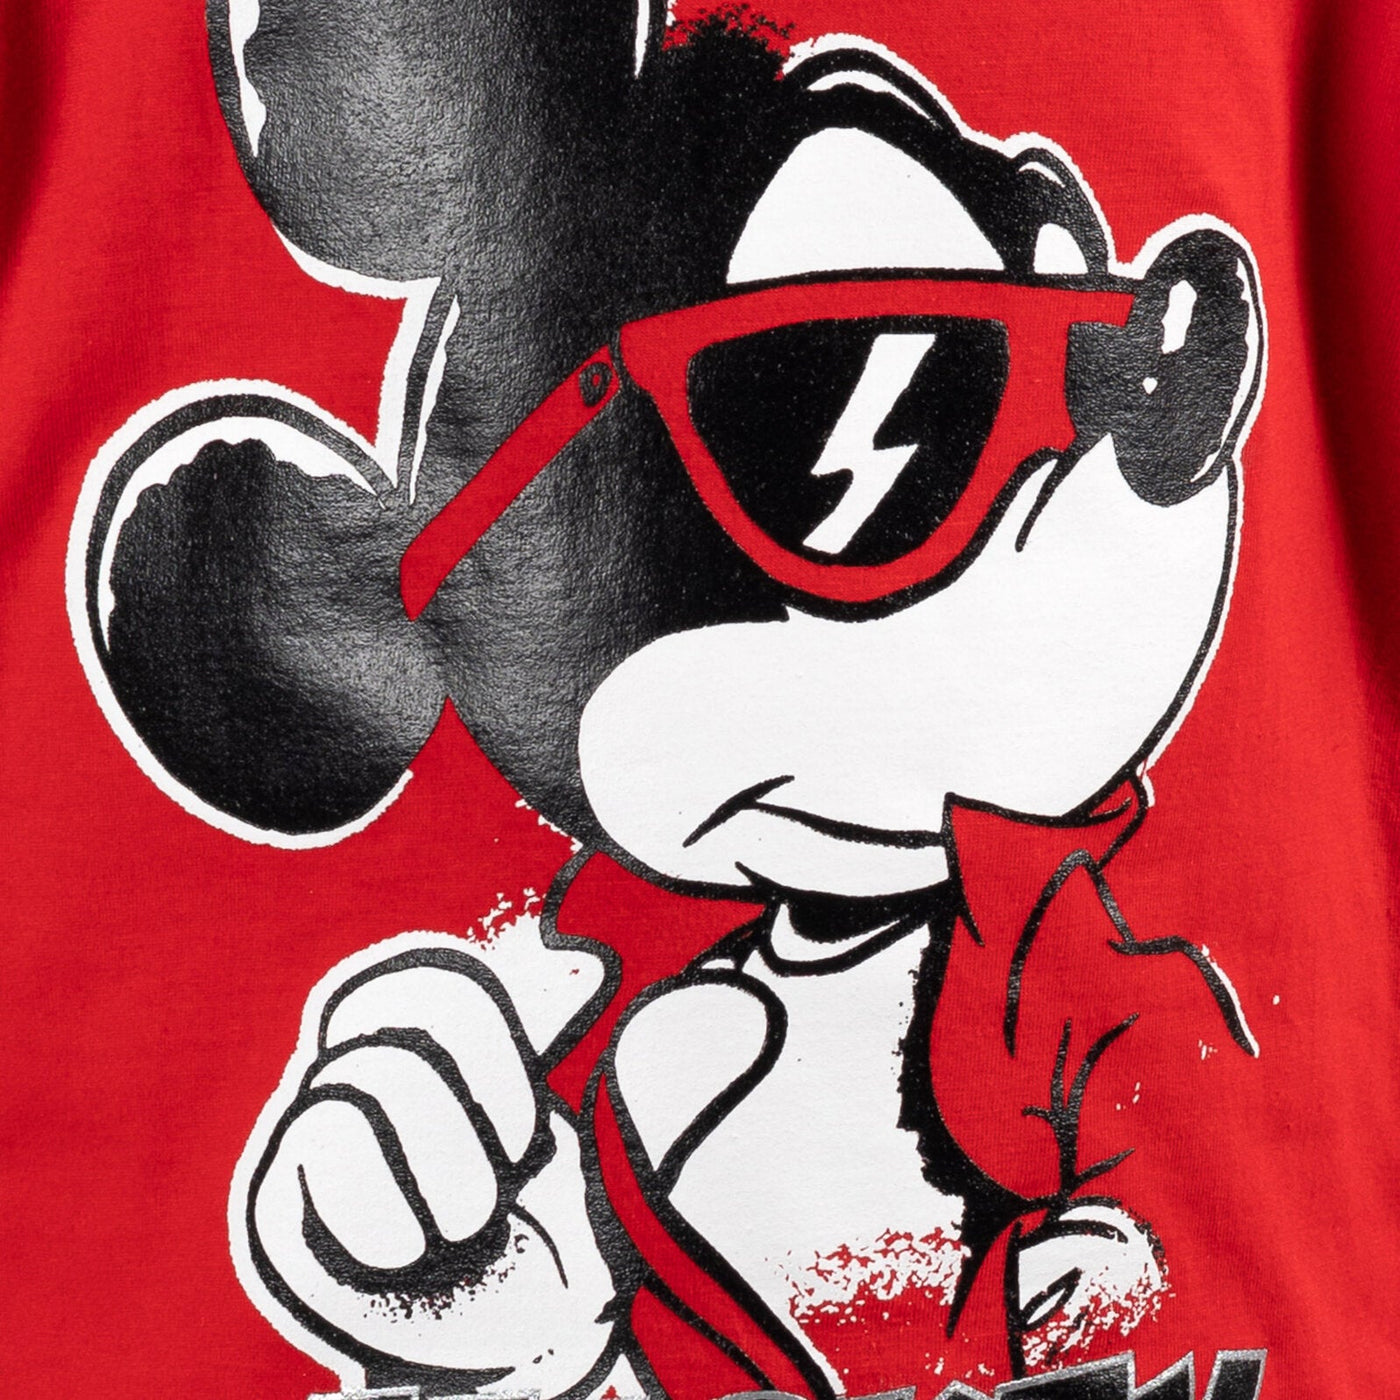 Disney Mickey Mouse Graphic T-Shirt & Shorts Set - imagikids